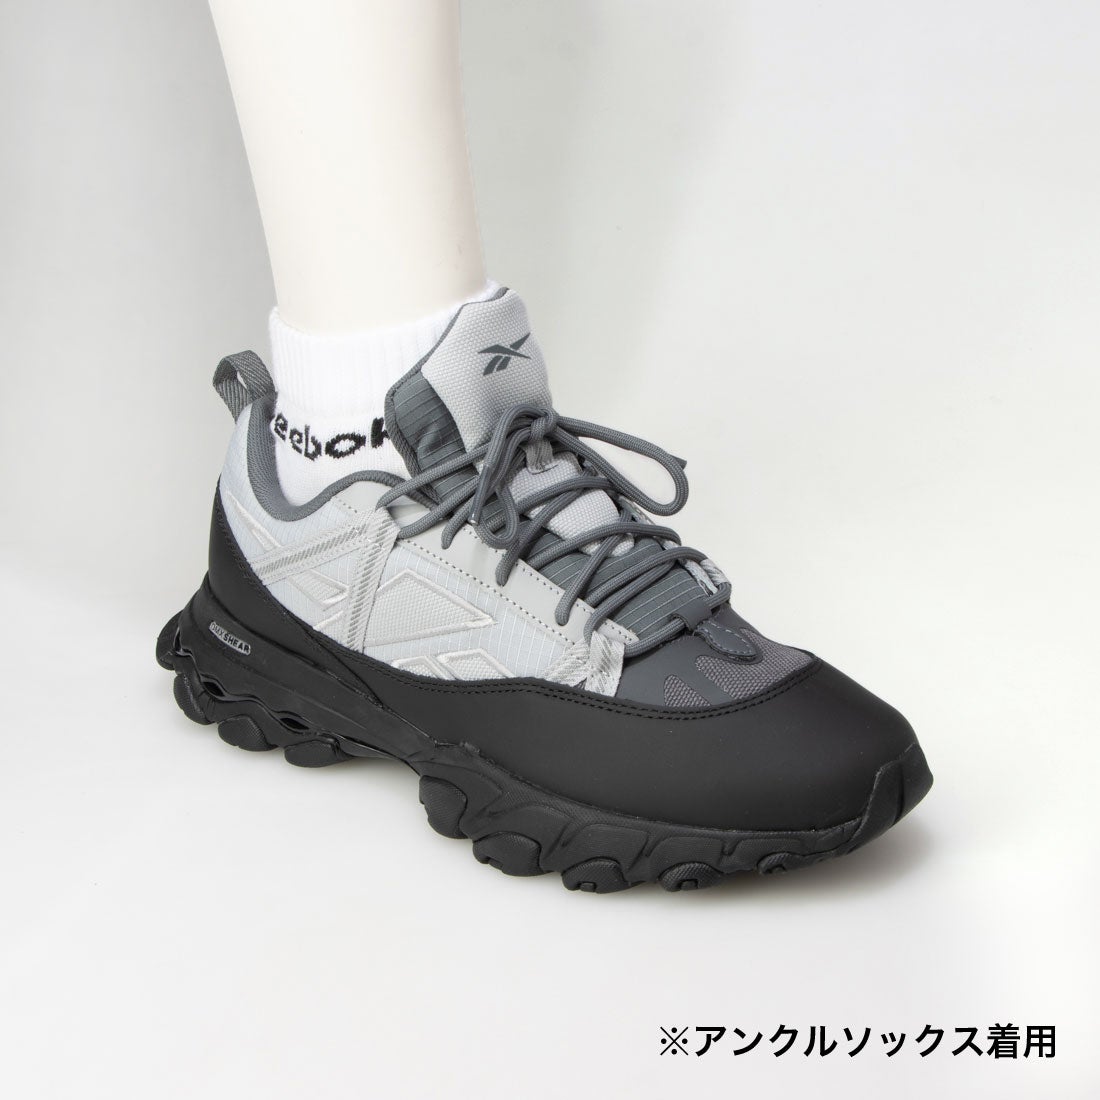 darse cuenta comerciante leopardo DMX トレイル シャドー / DMX Trail Shadow Shoes （ピュアグレー） -Reebok 公式オンラインショップ